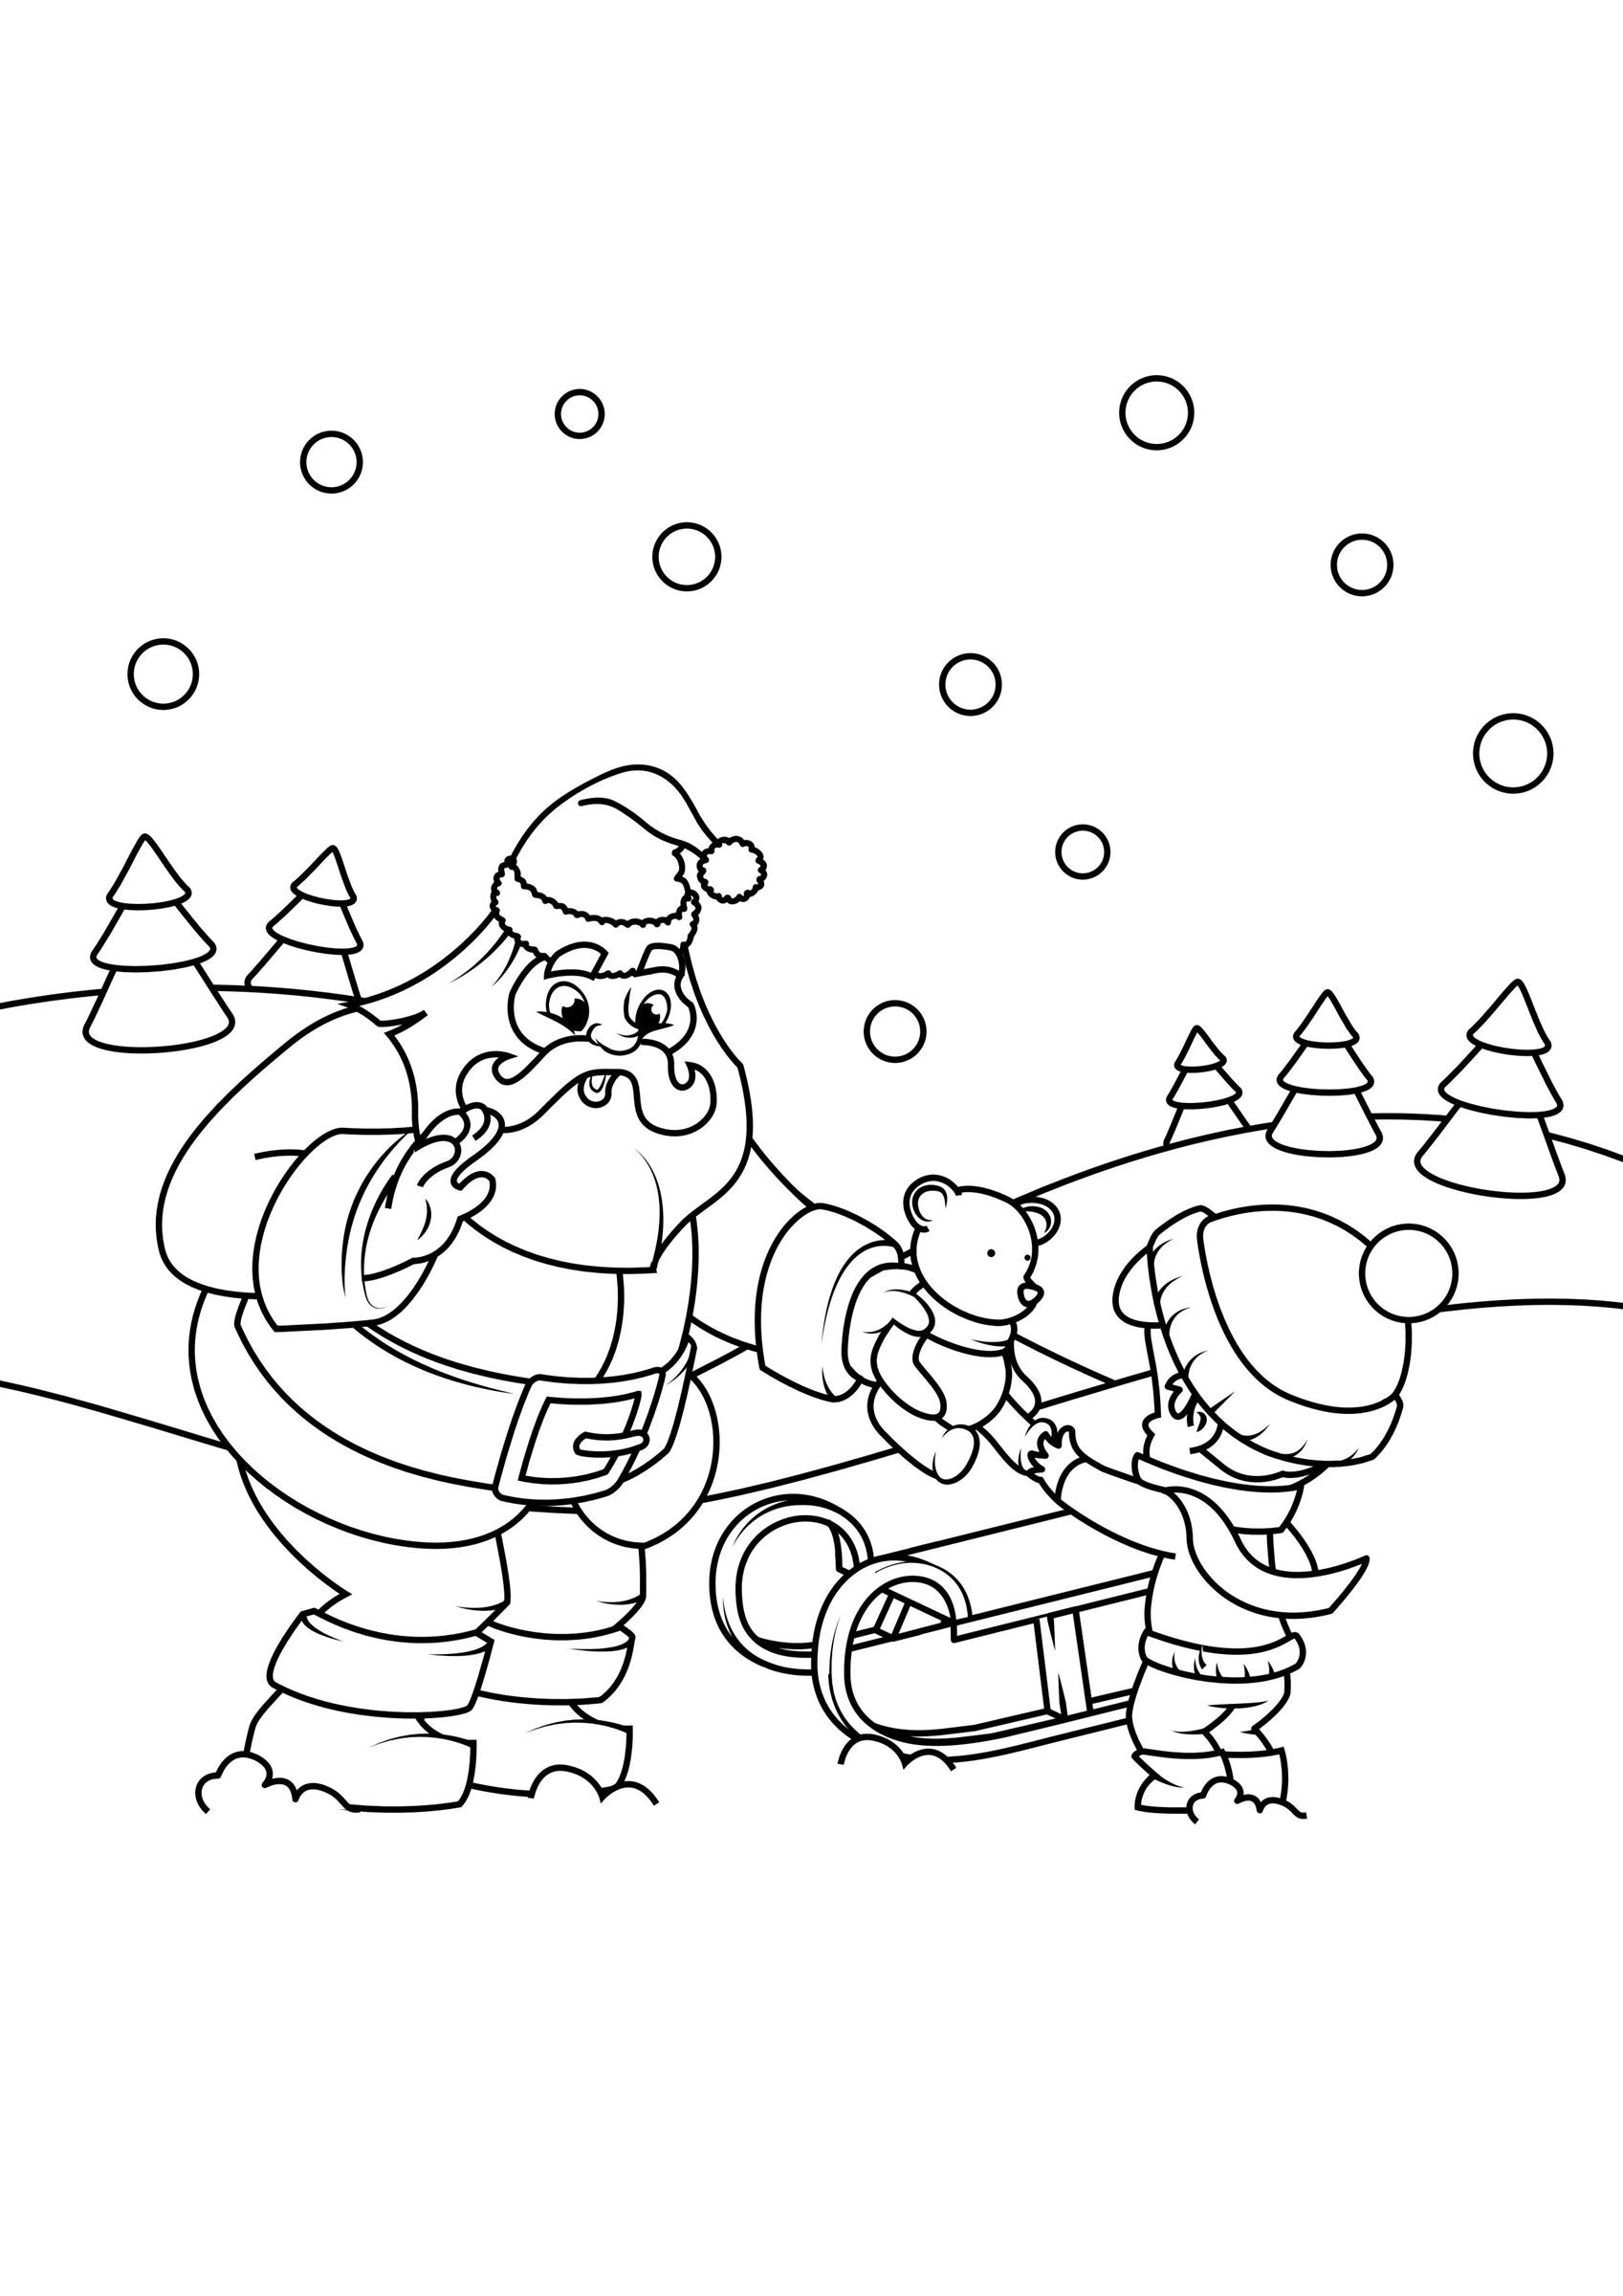 Coloring page santa claus gives parcel